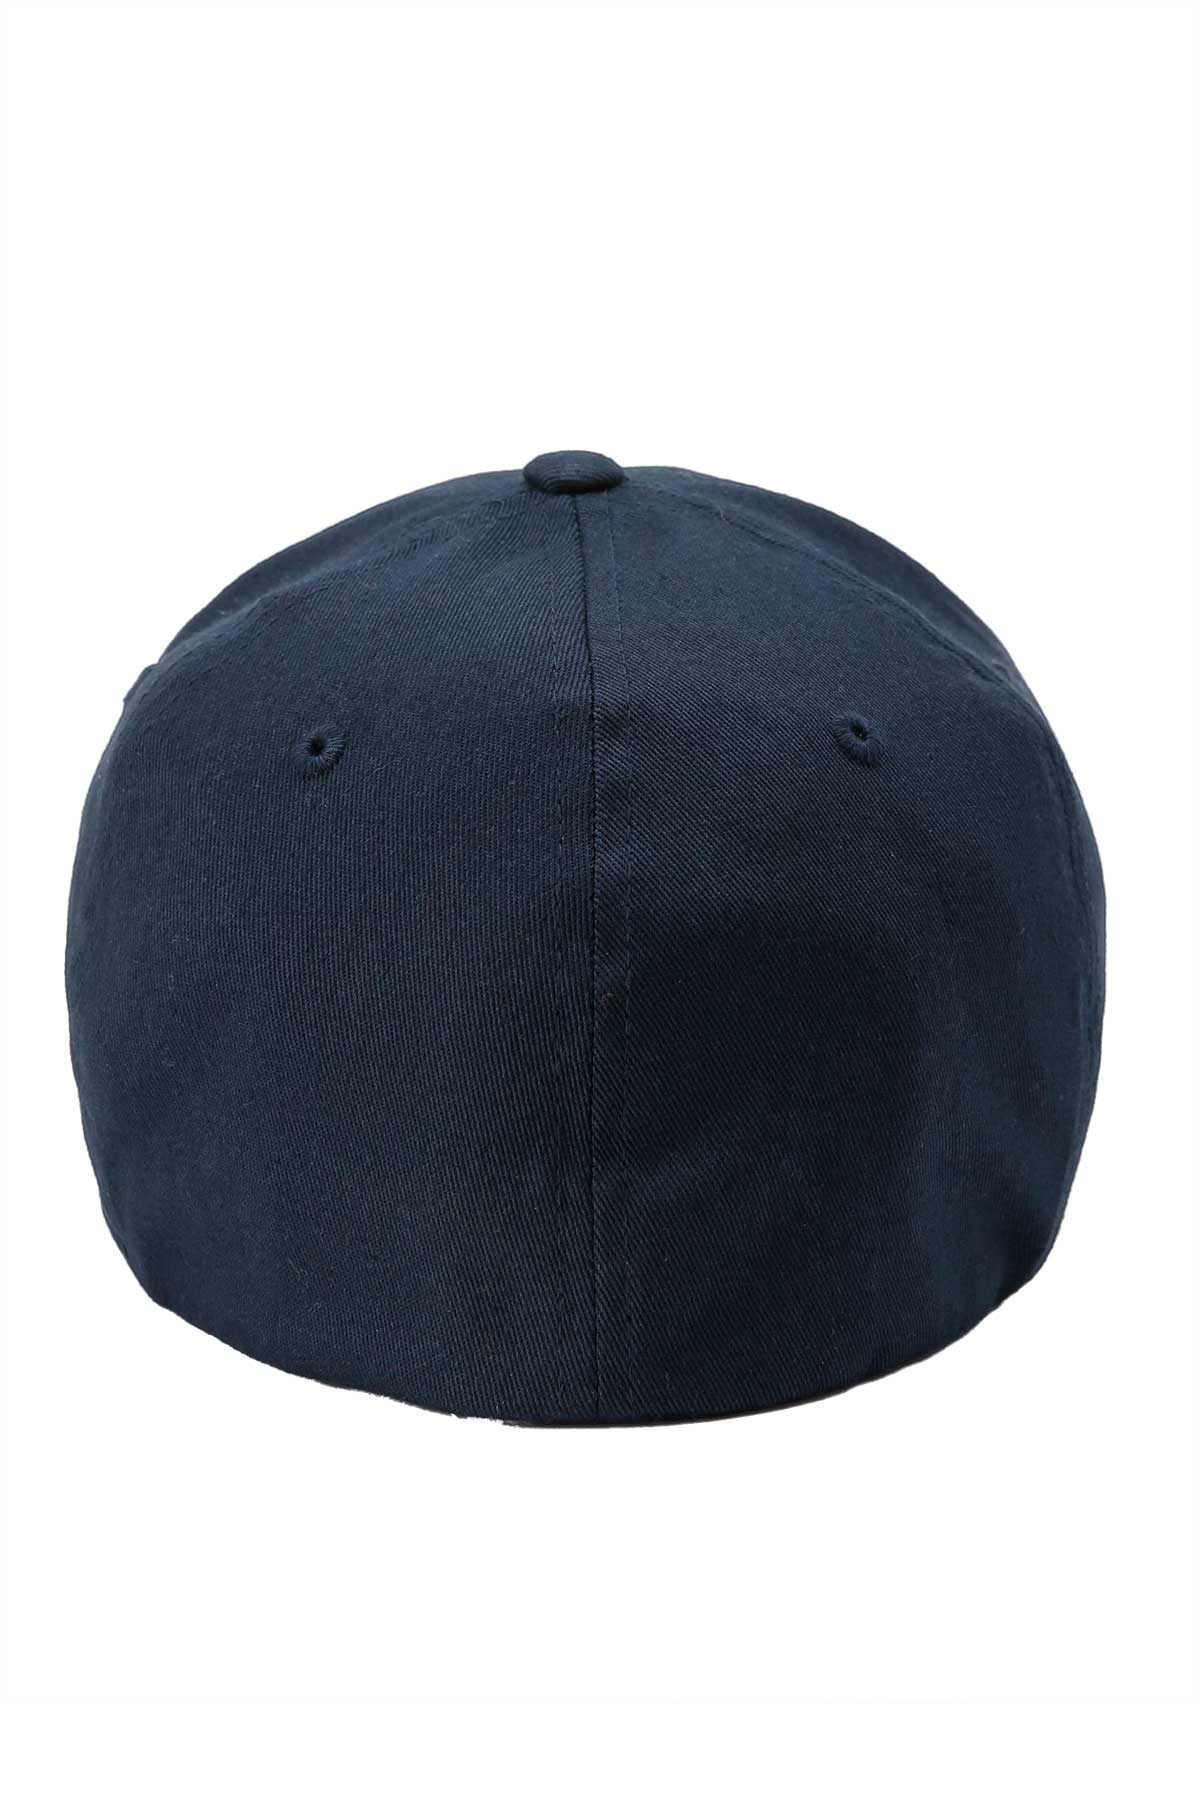 CINCH MEN'S PATRIOTIC BASEBALL CAP - BLUE